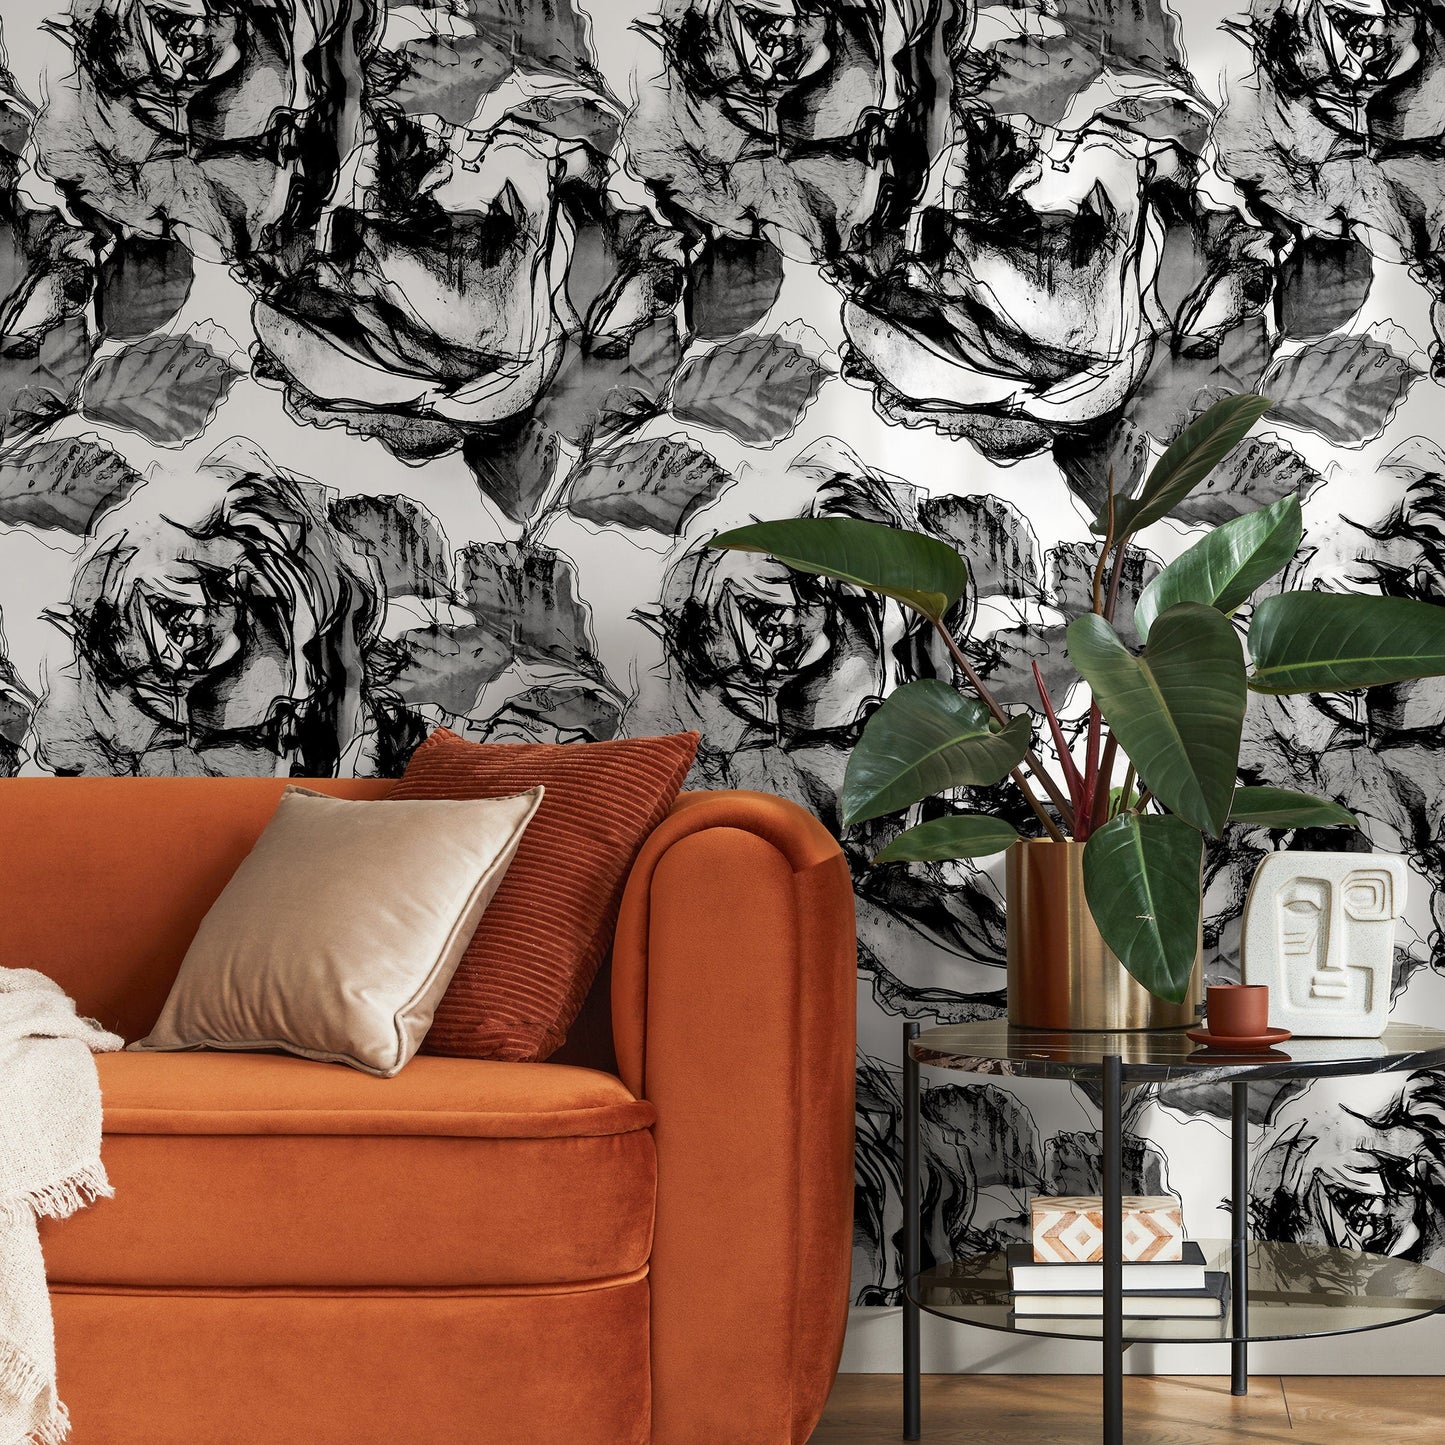 Self-adhesive Removable Wallpaper, Floral Wallpaper, Peel and Stick Fabric Wallpaper, Custom Design Wall, Wallpaper - A403